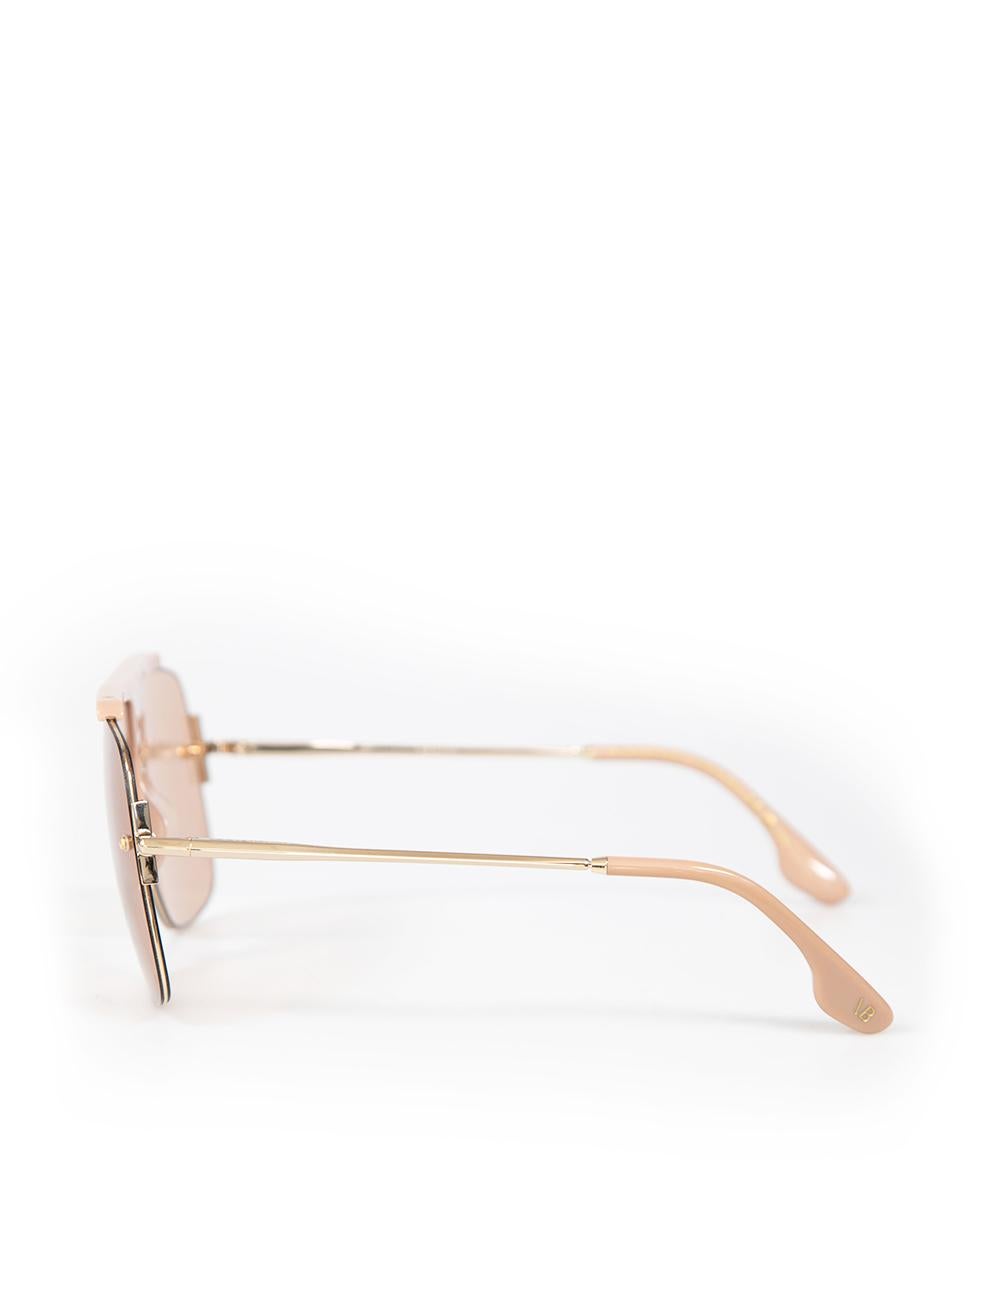 Victoria Beckham Nude Navigator Frame Sunglasses For Sale 1